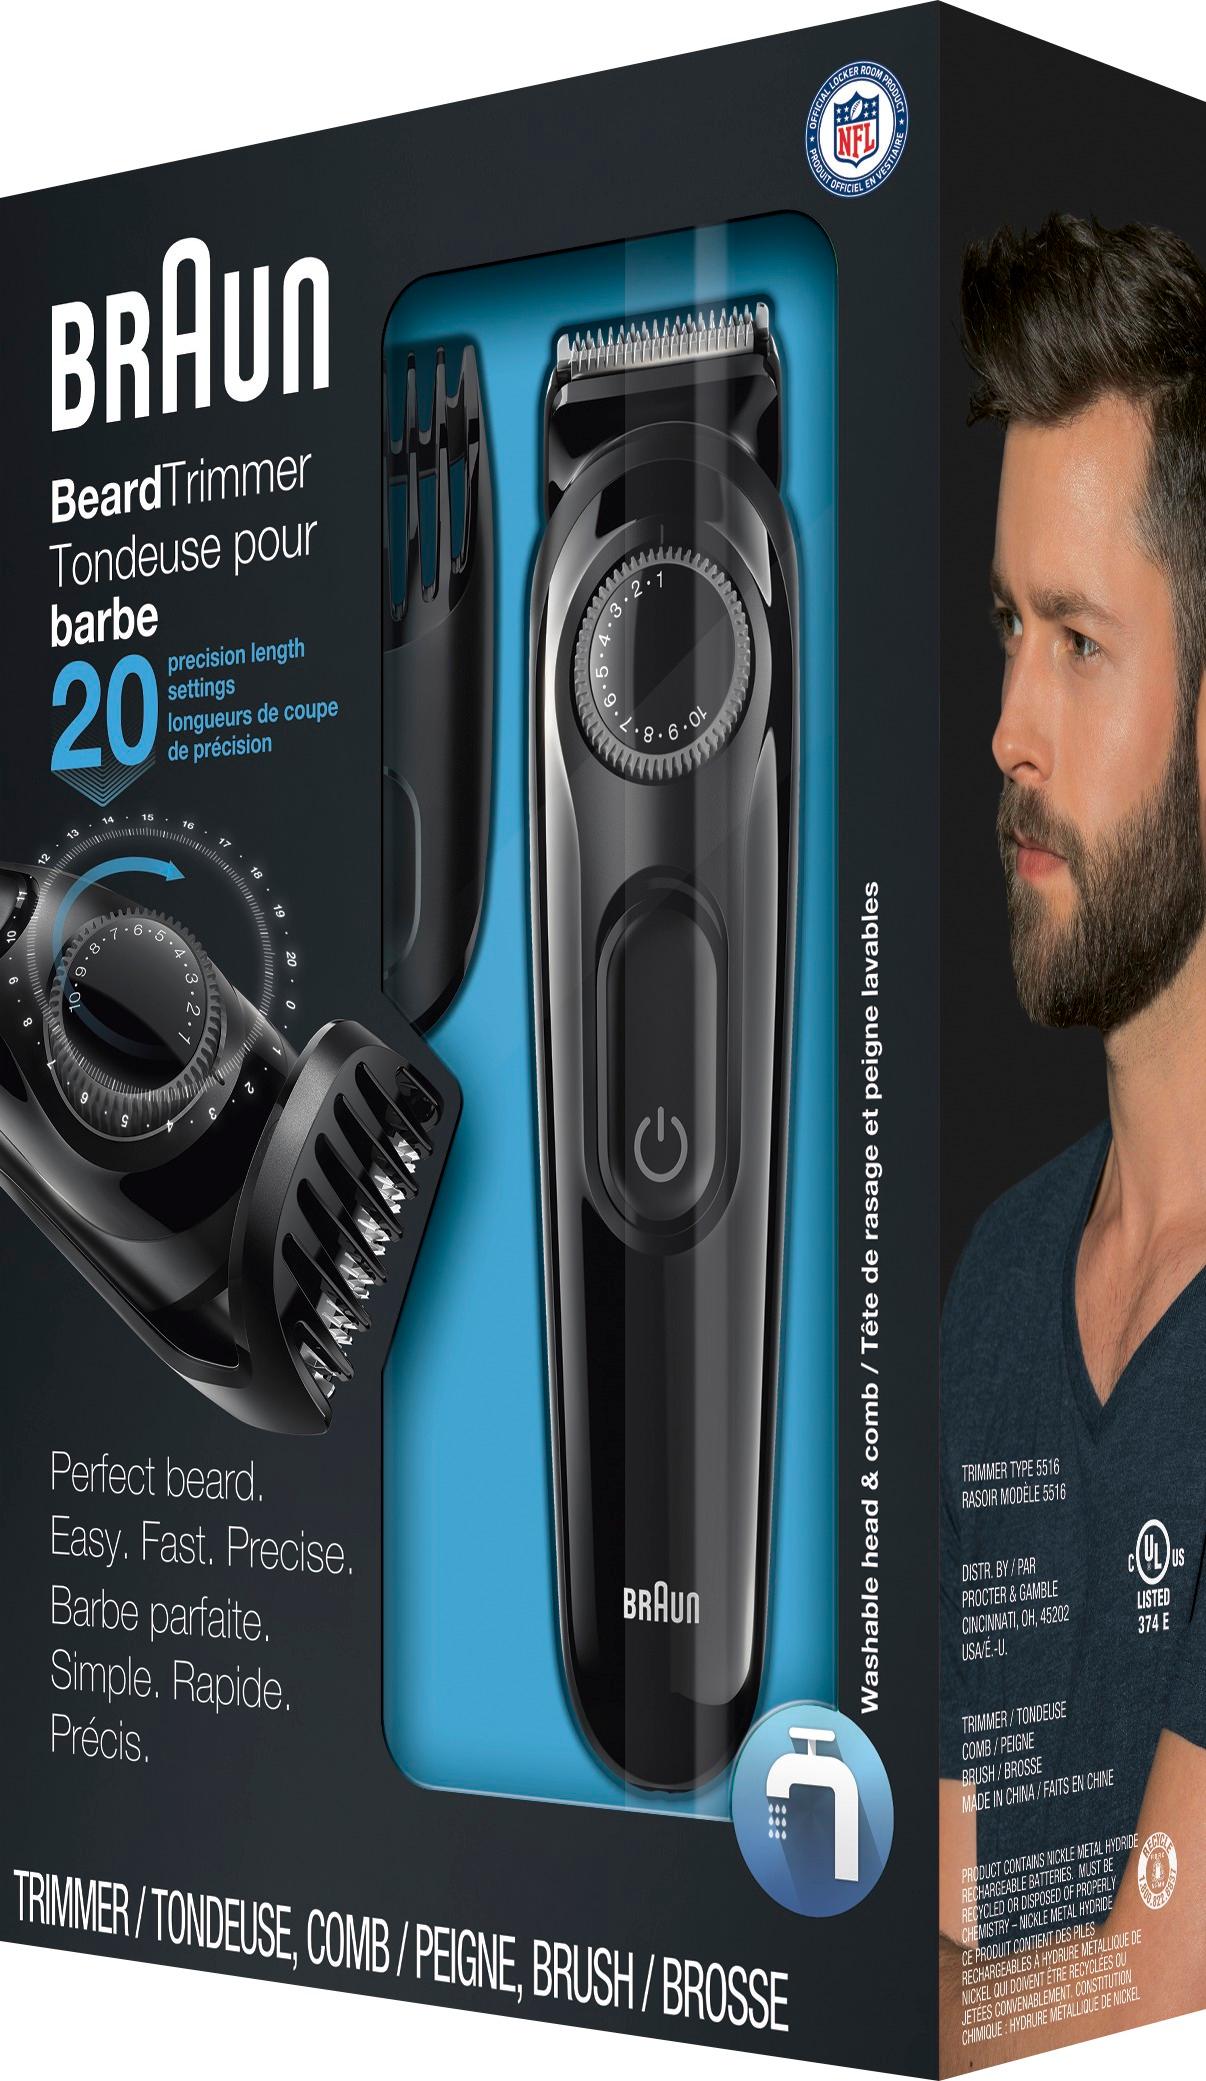 braun beard trimmer type 5516